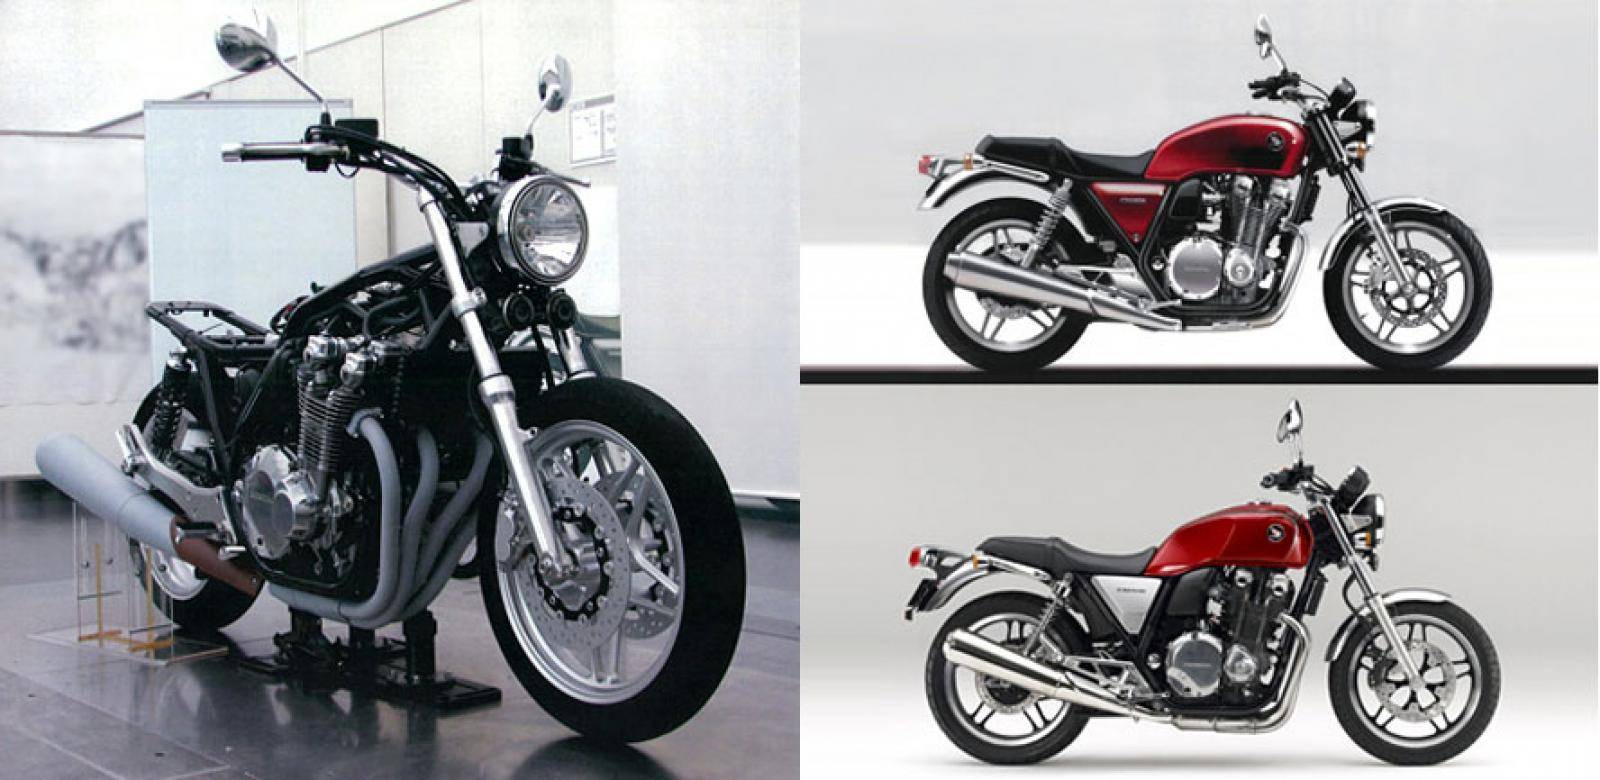 Honda cb1100 (ex, dlx, rs): review, history, specs - bikeswiki.com, japanese motorcycle encyclopedia